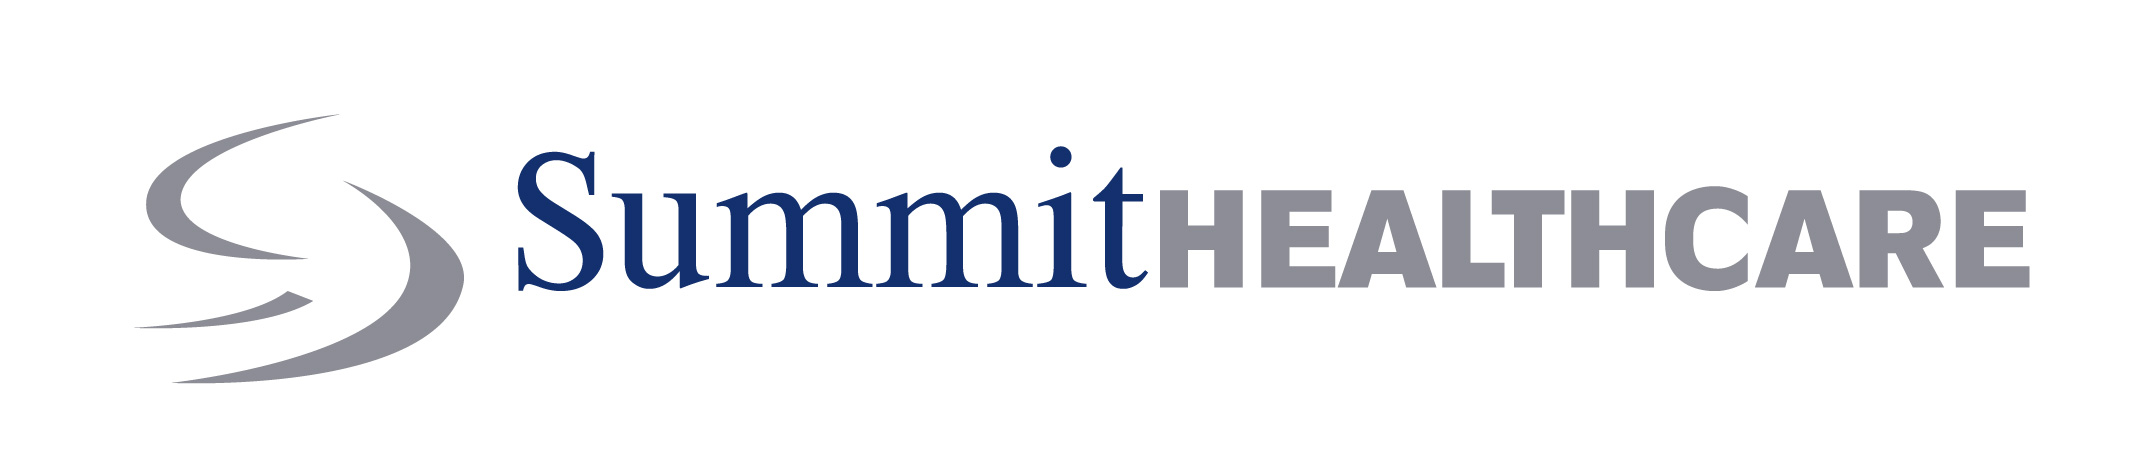 SummitHealthcare Logo